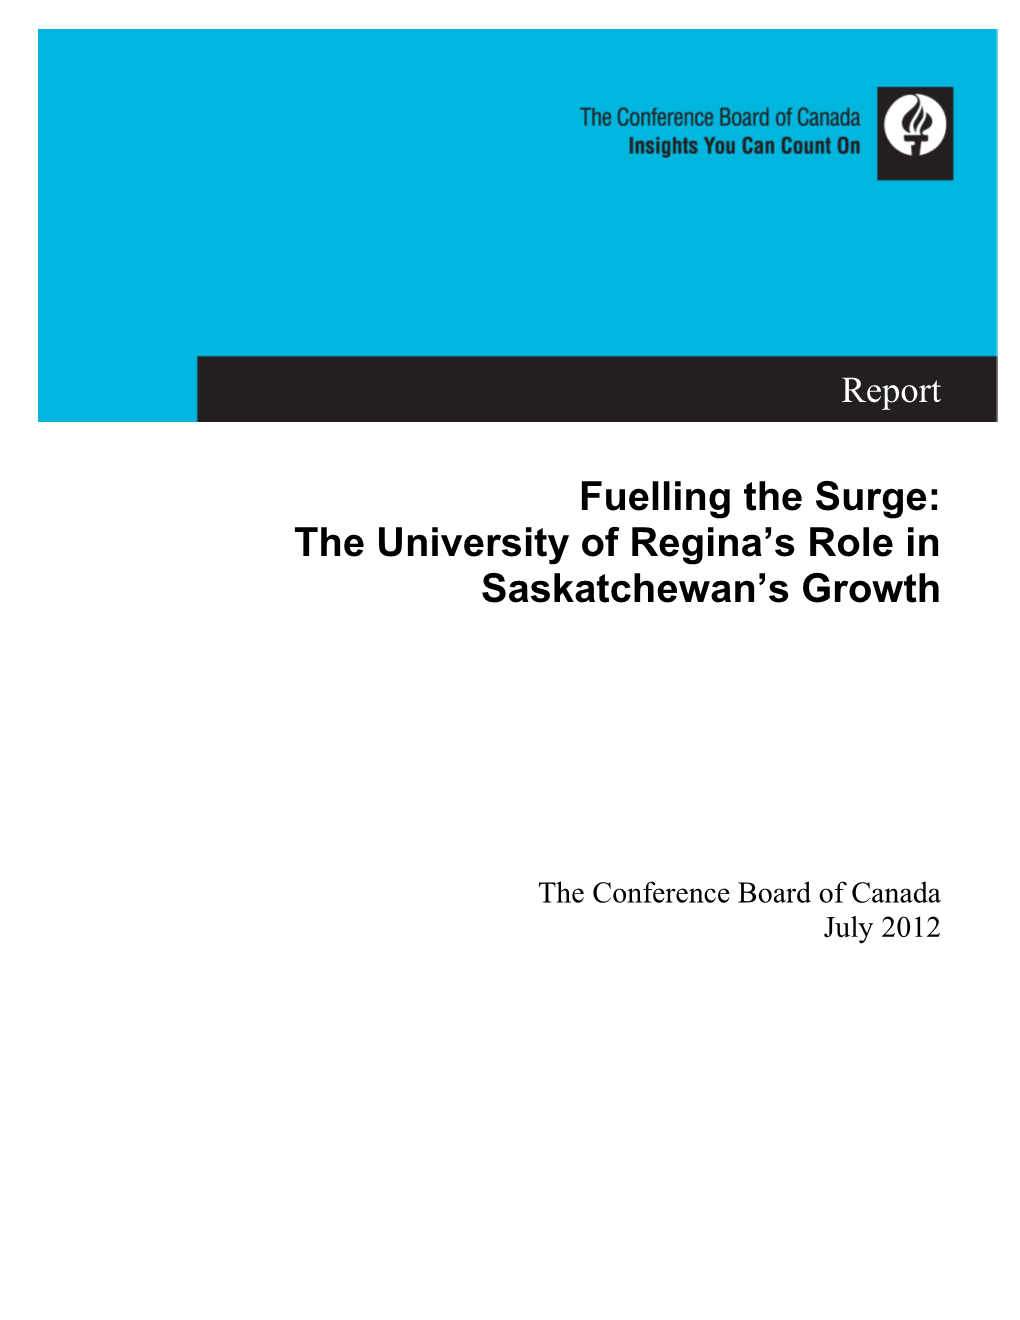 Fuelling the Surge: the University of Regina's Role in Saskatchewan's